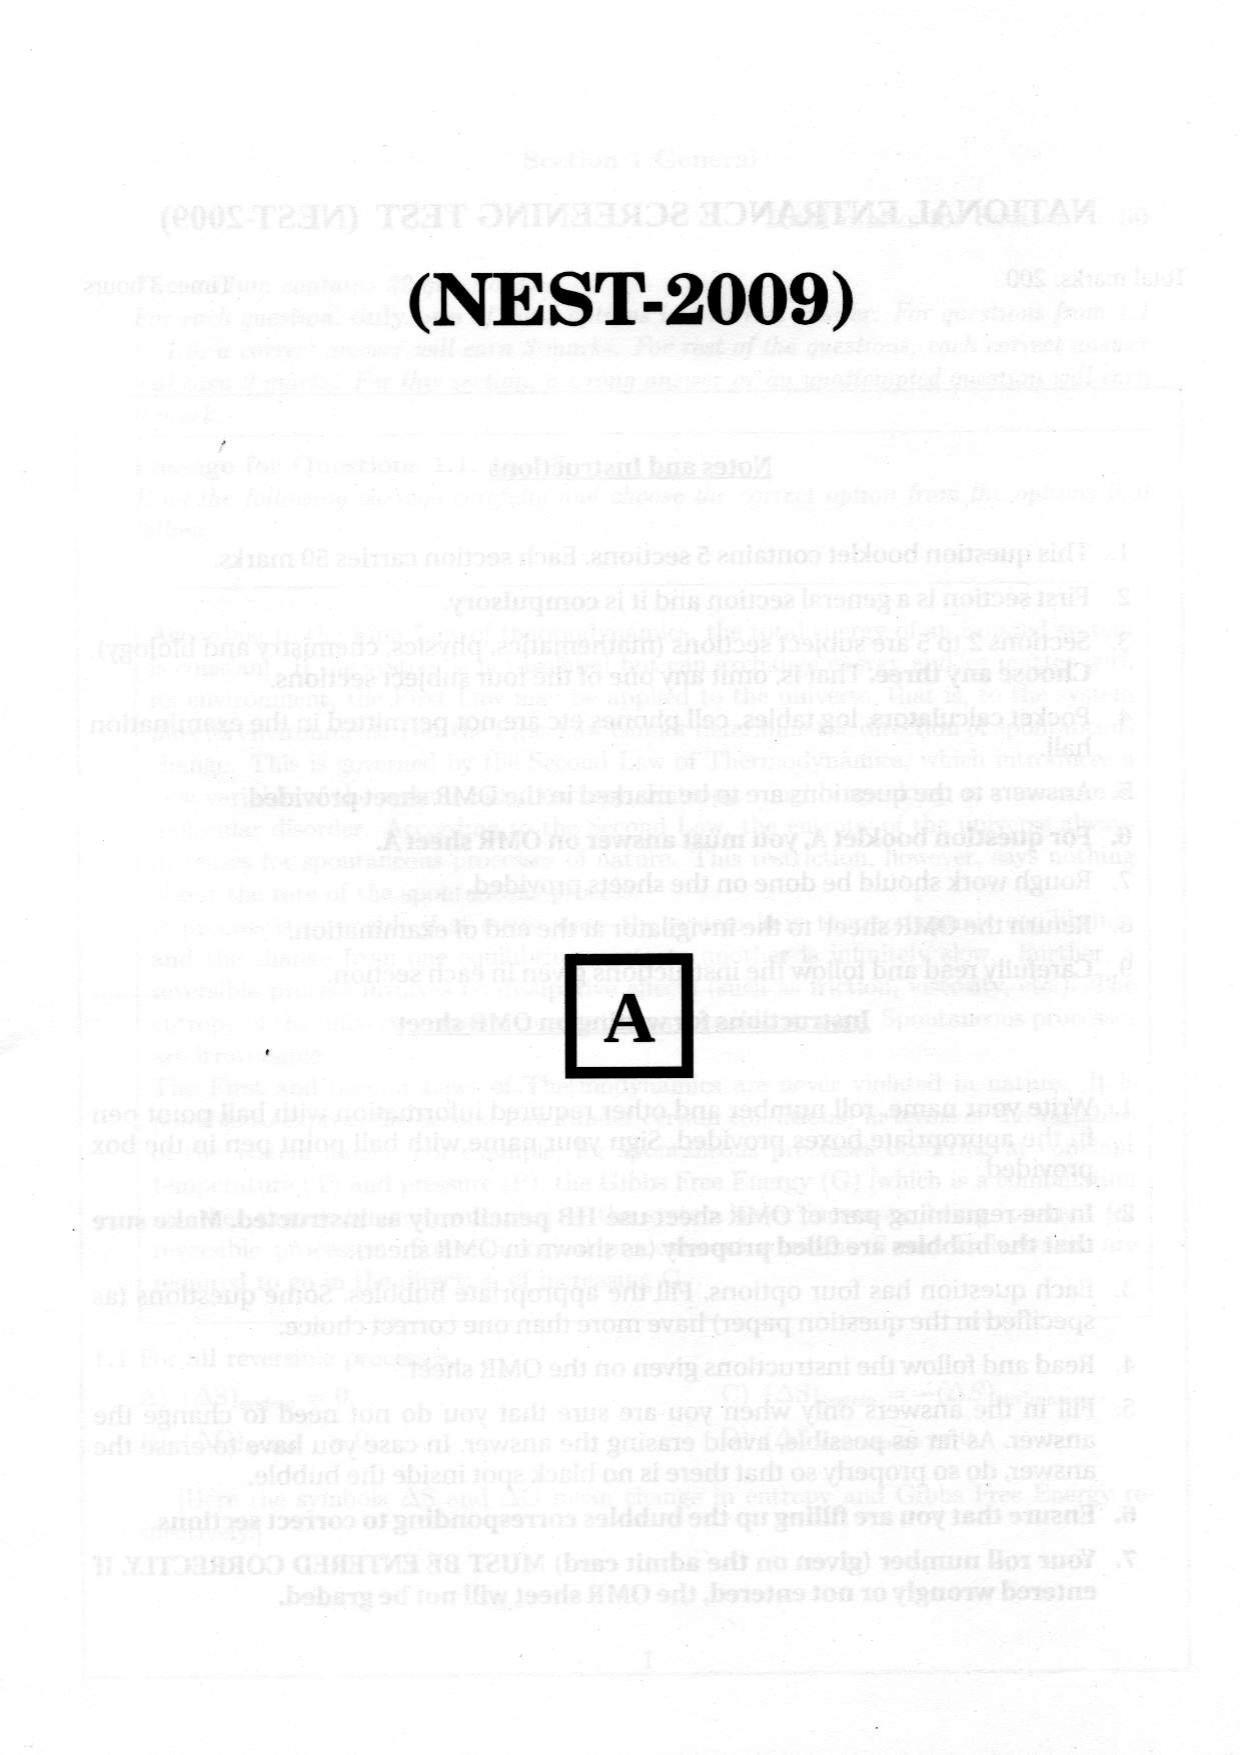 NEST 2009 Question Paper - Page 1